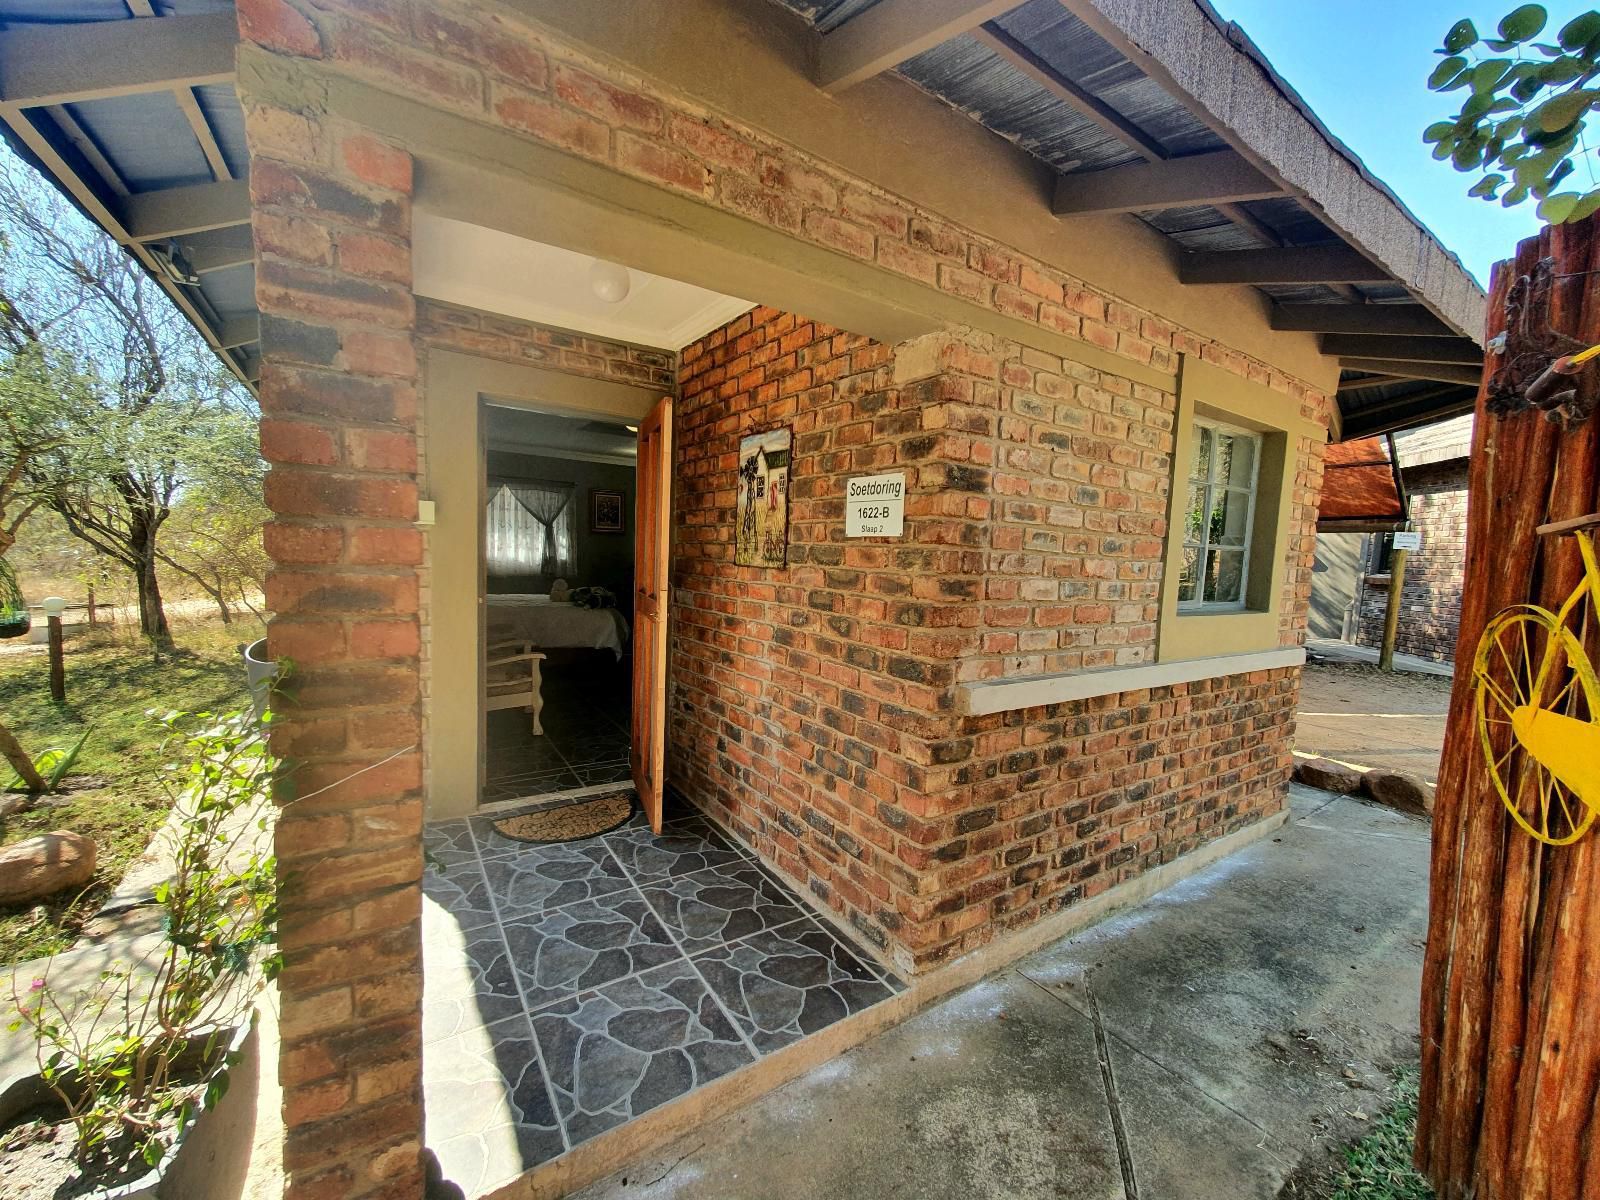 Doringpoort Lodge Marloth Park Mpumalanga South Africa Cabin, Building, Architecture, House, Brick Texture, Texture